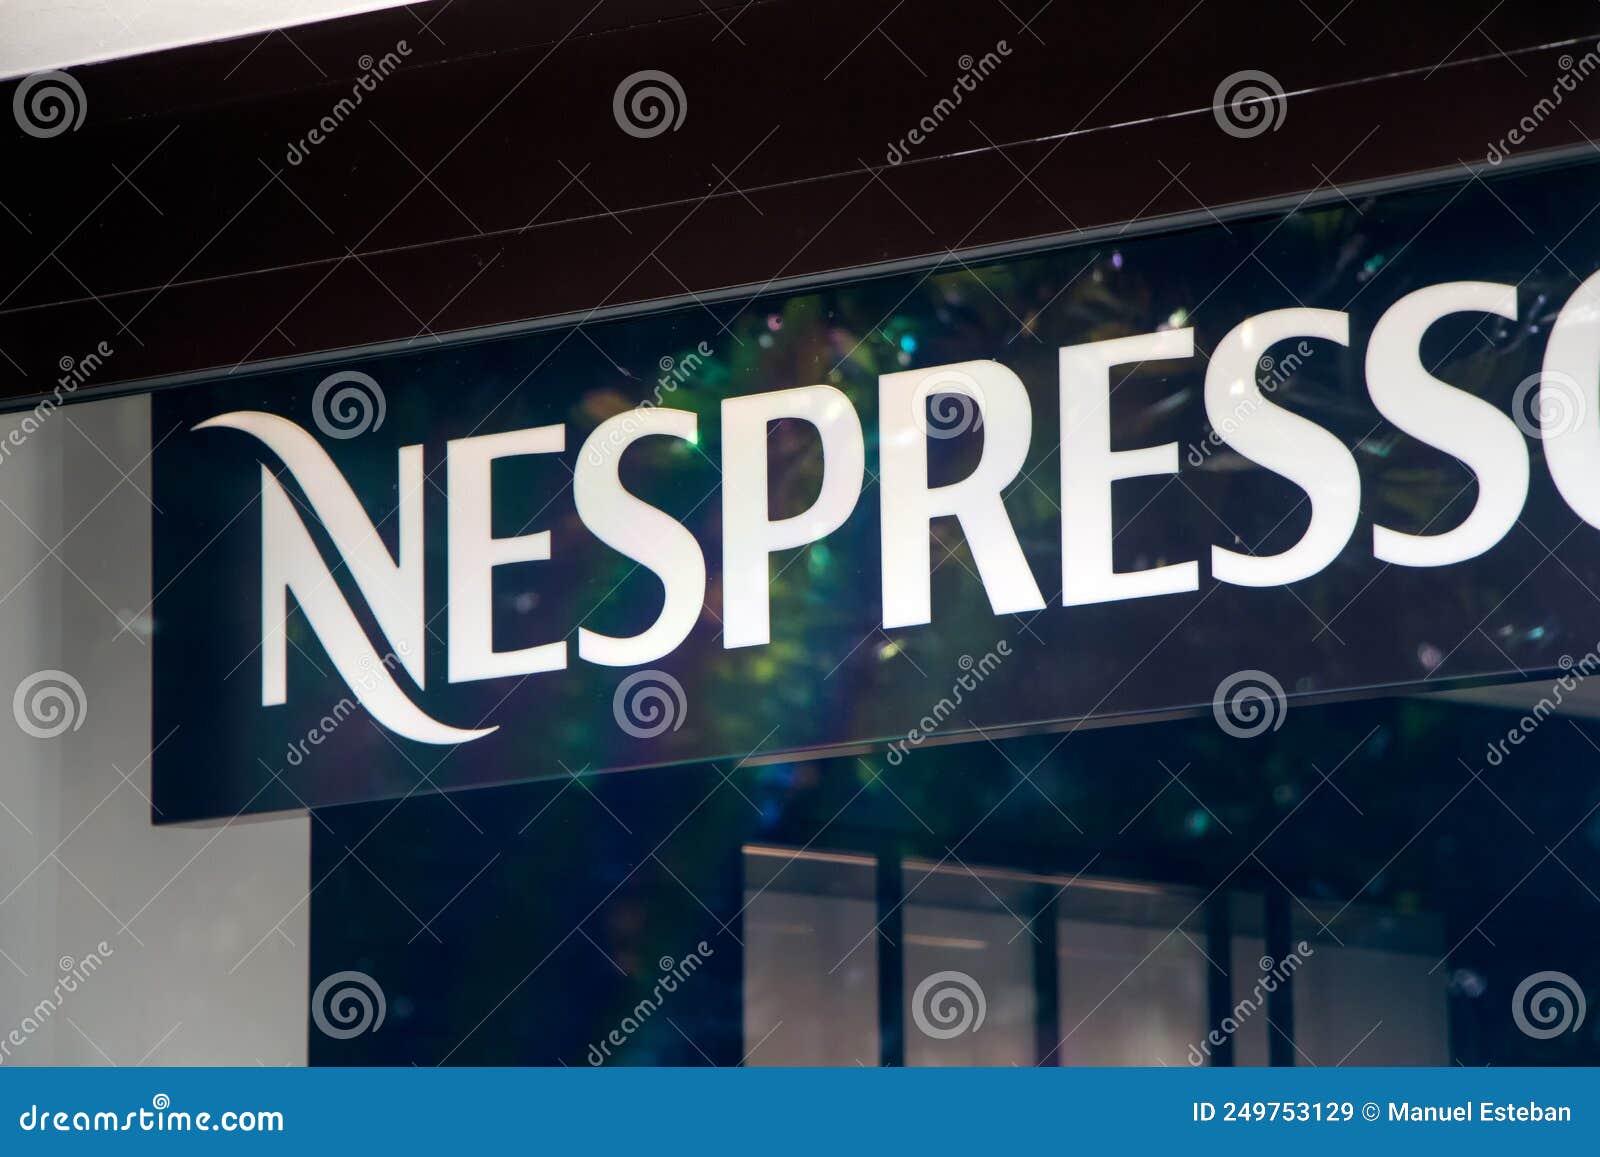 Nespresso Switzerland